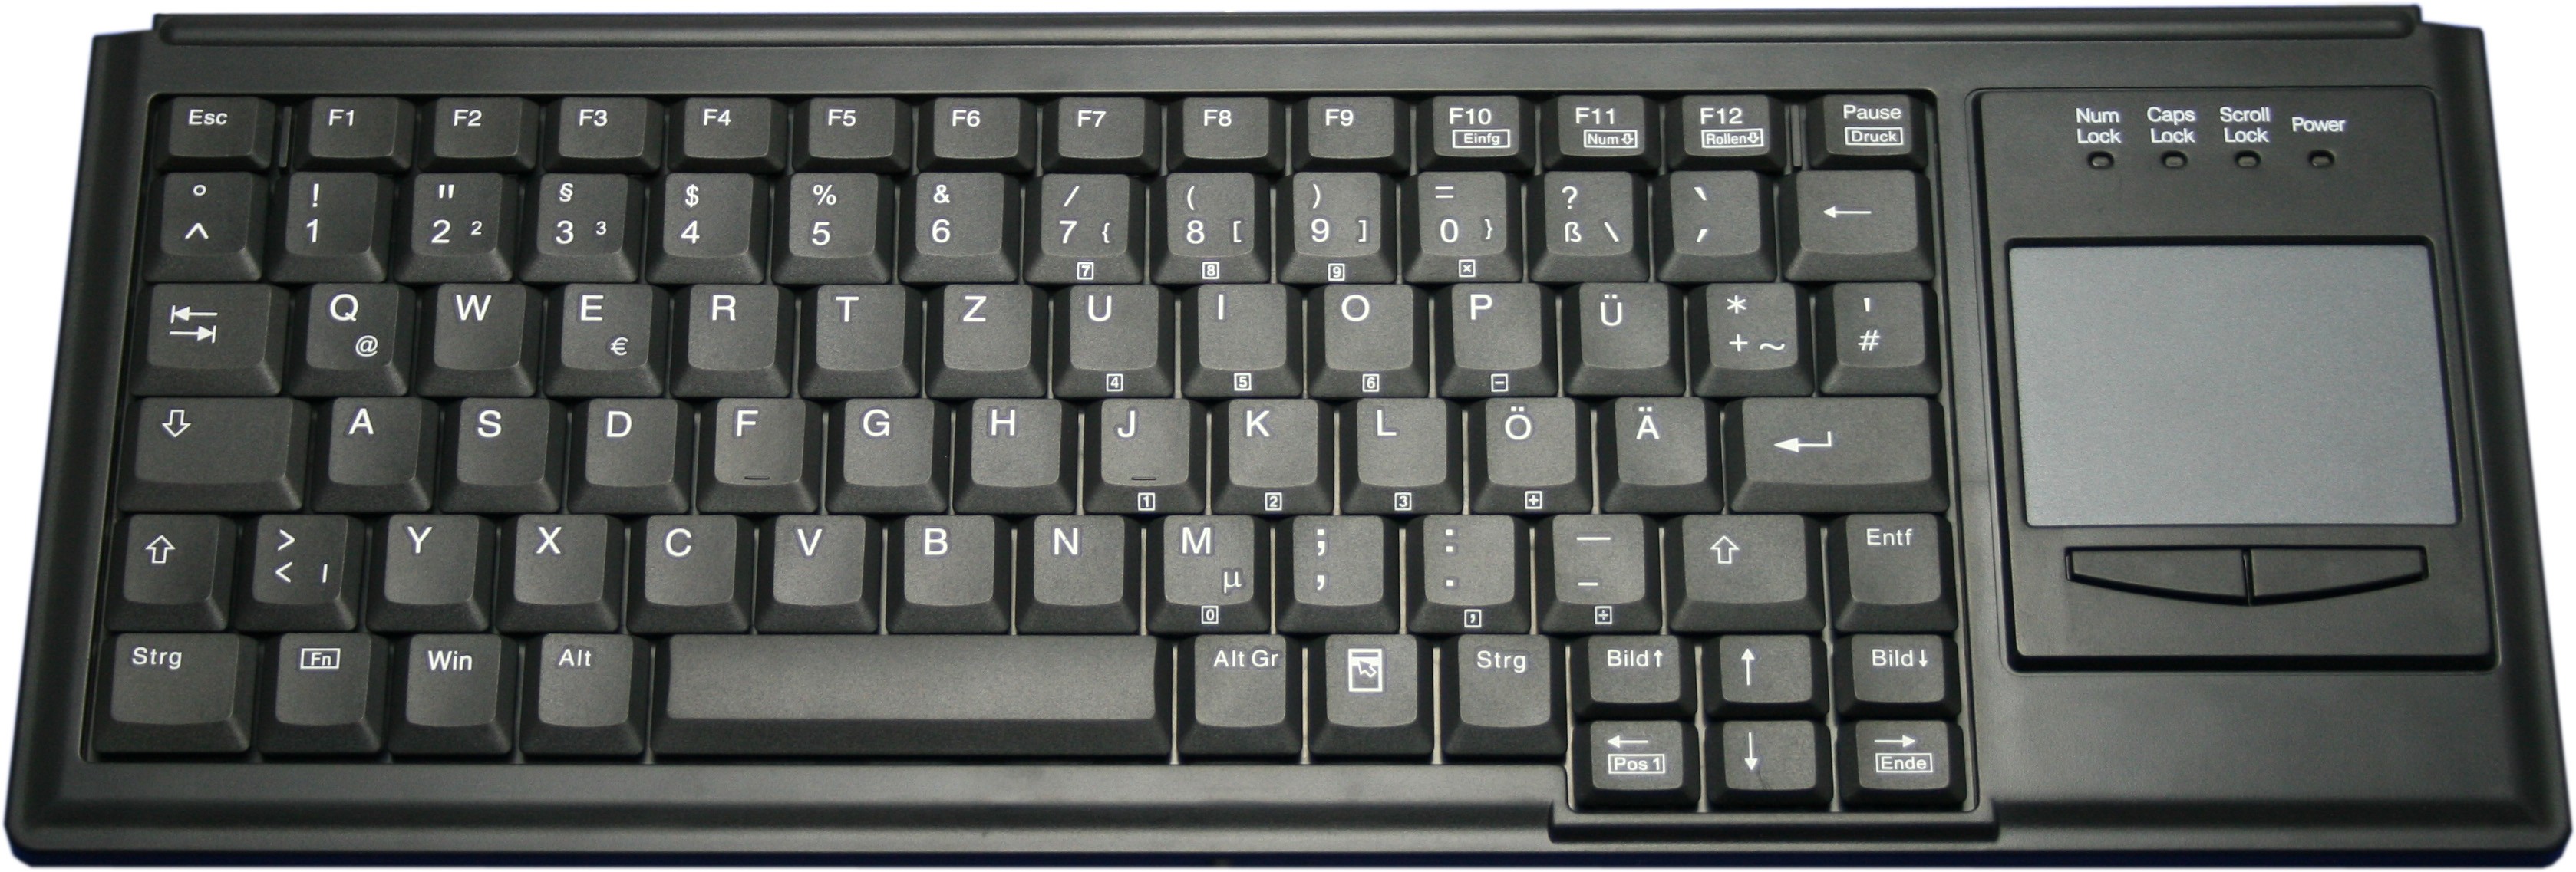 83 Key Notebook Style Touchpad Keyboard, USB, black, Italian layout